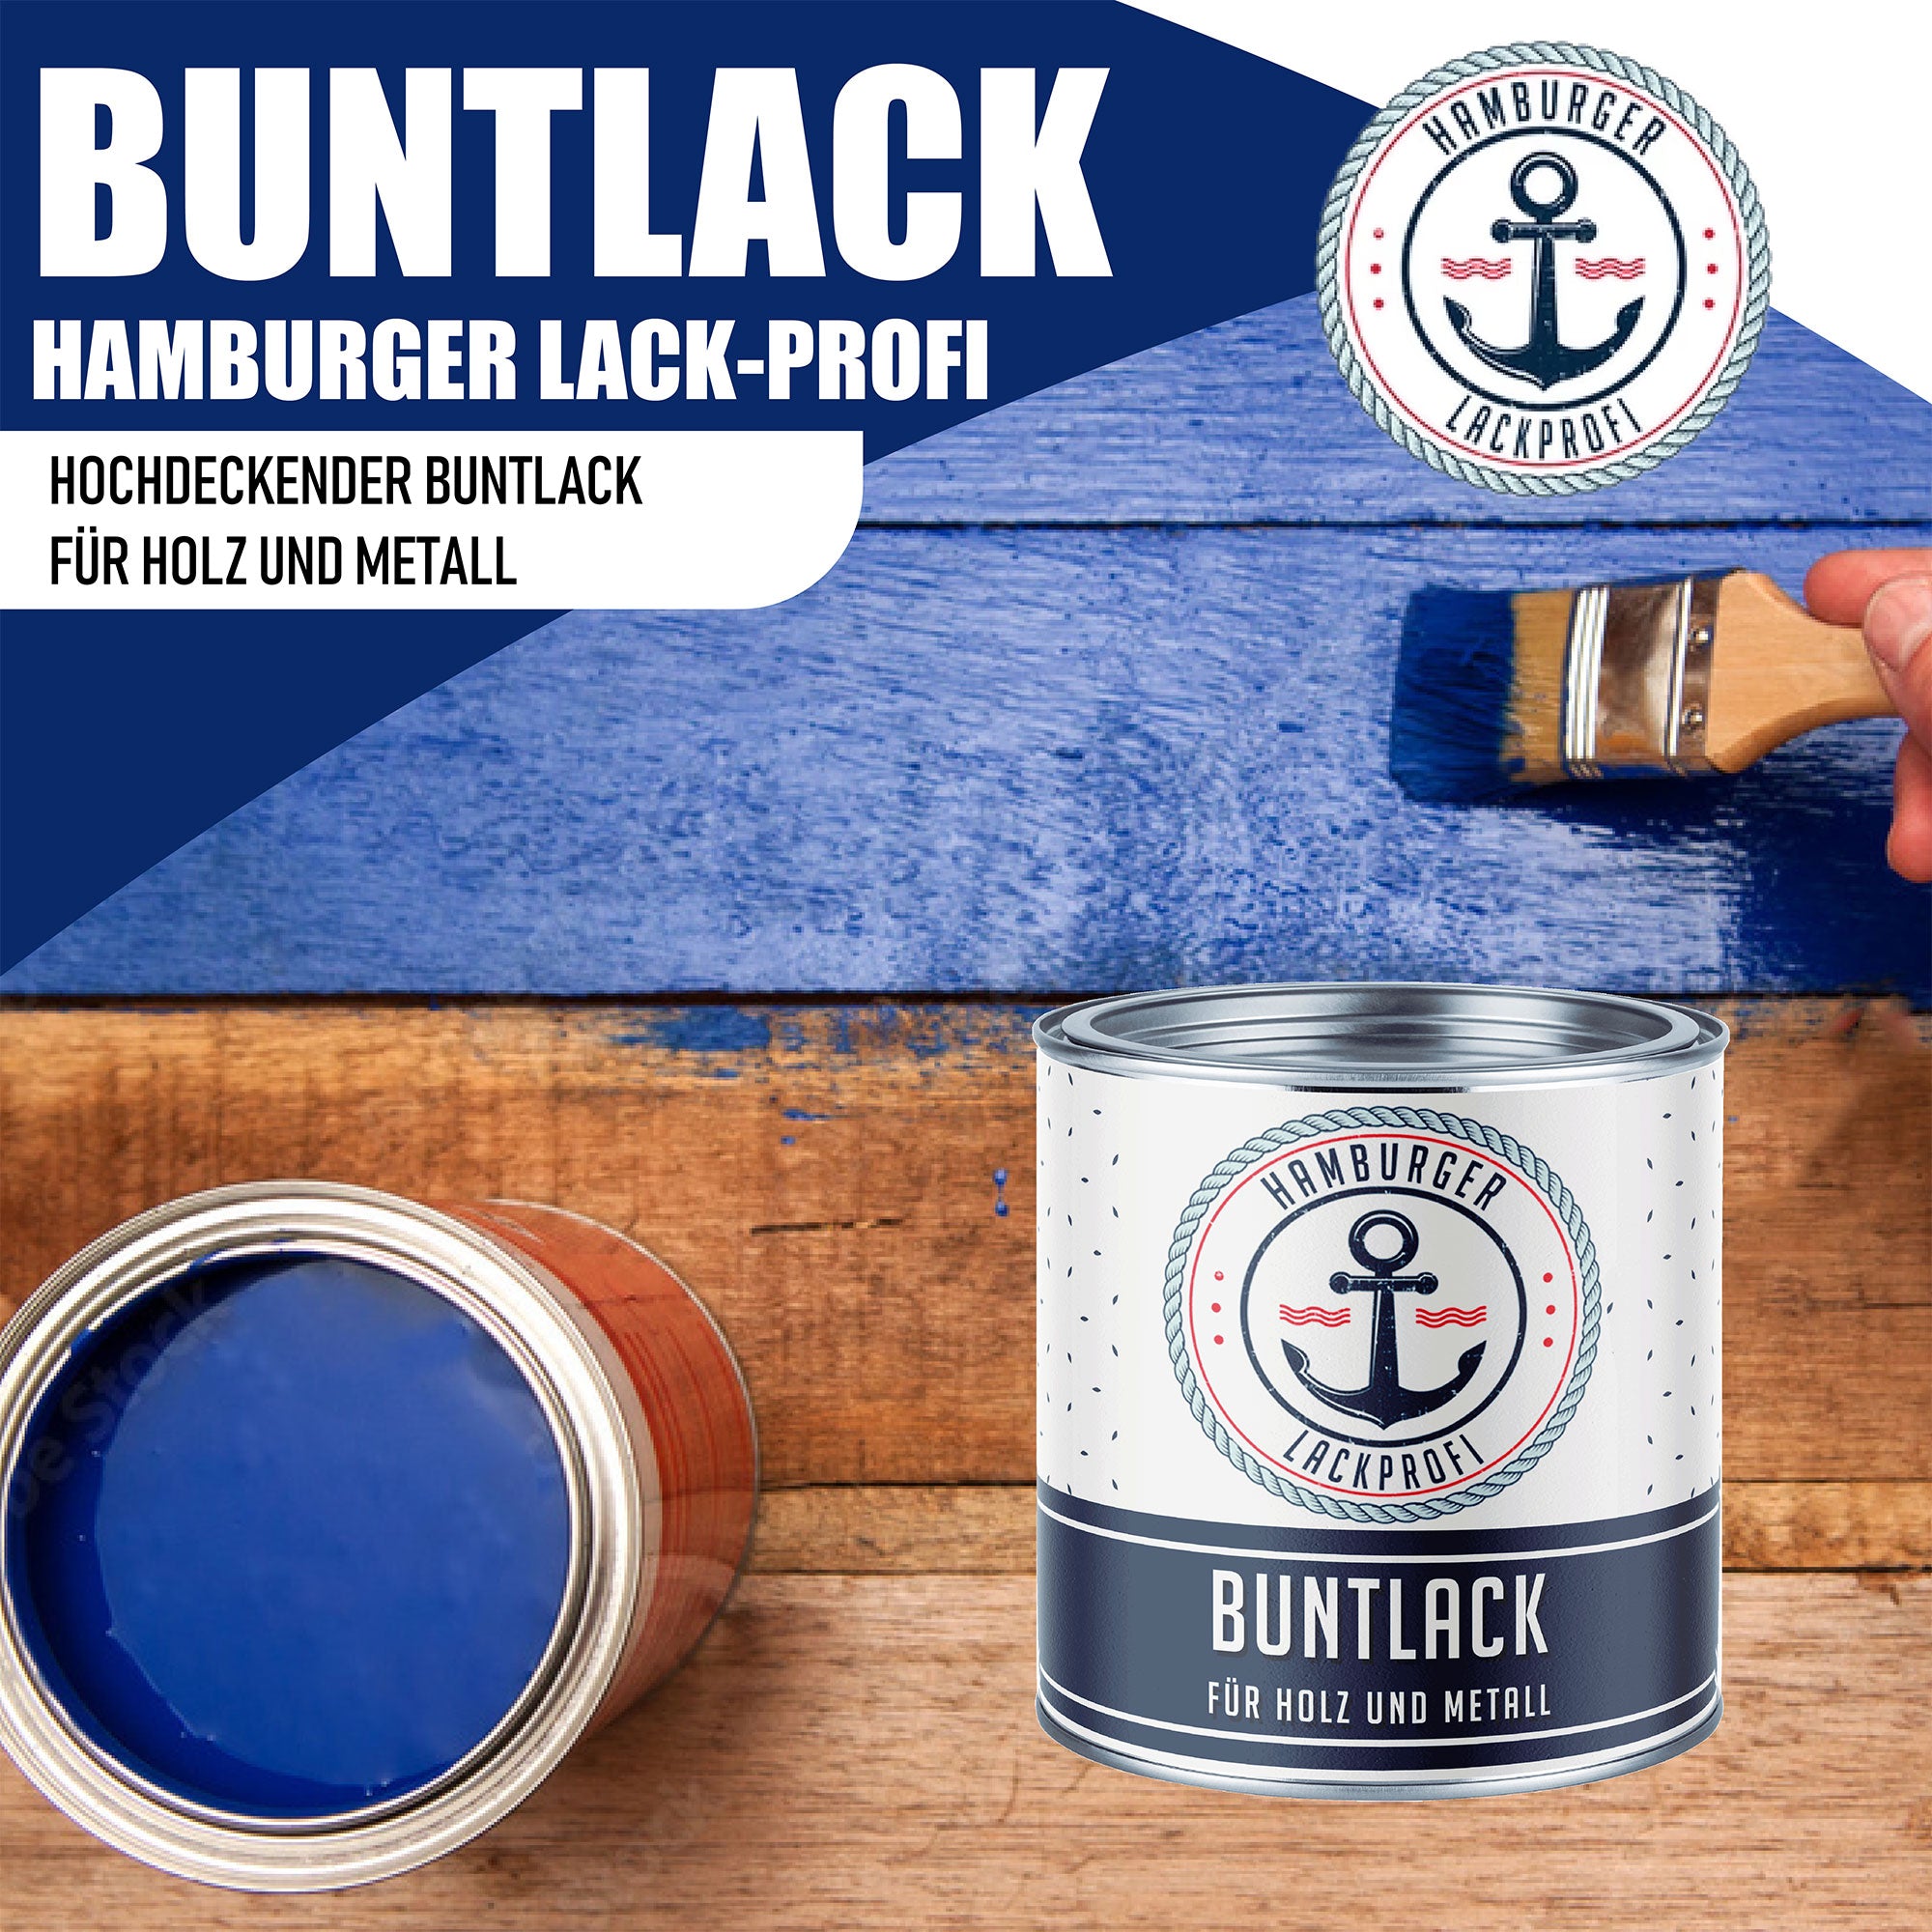 Hamburger Lack-Profi Buntlack Gelboliv RAL 6014 - Robuster Kunstharzlack